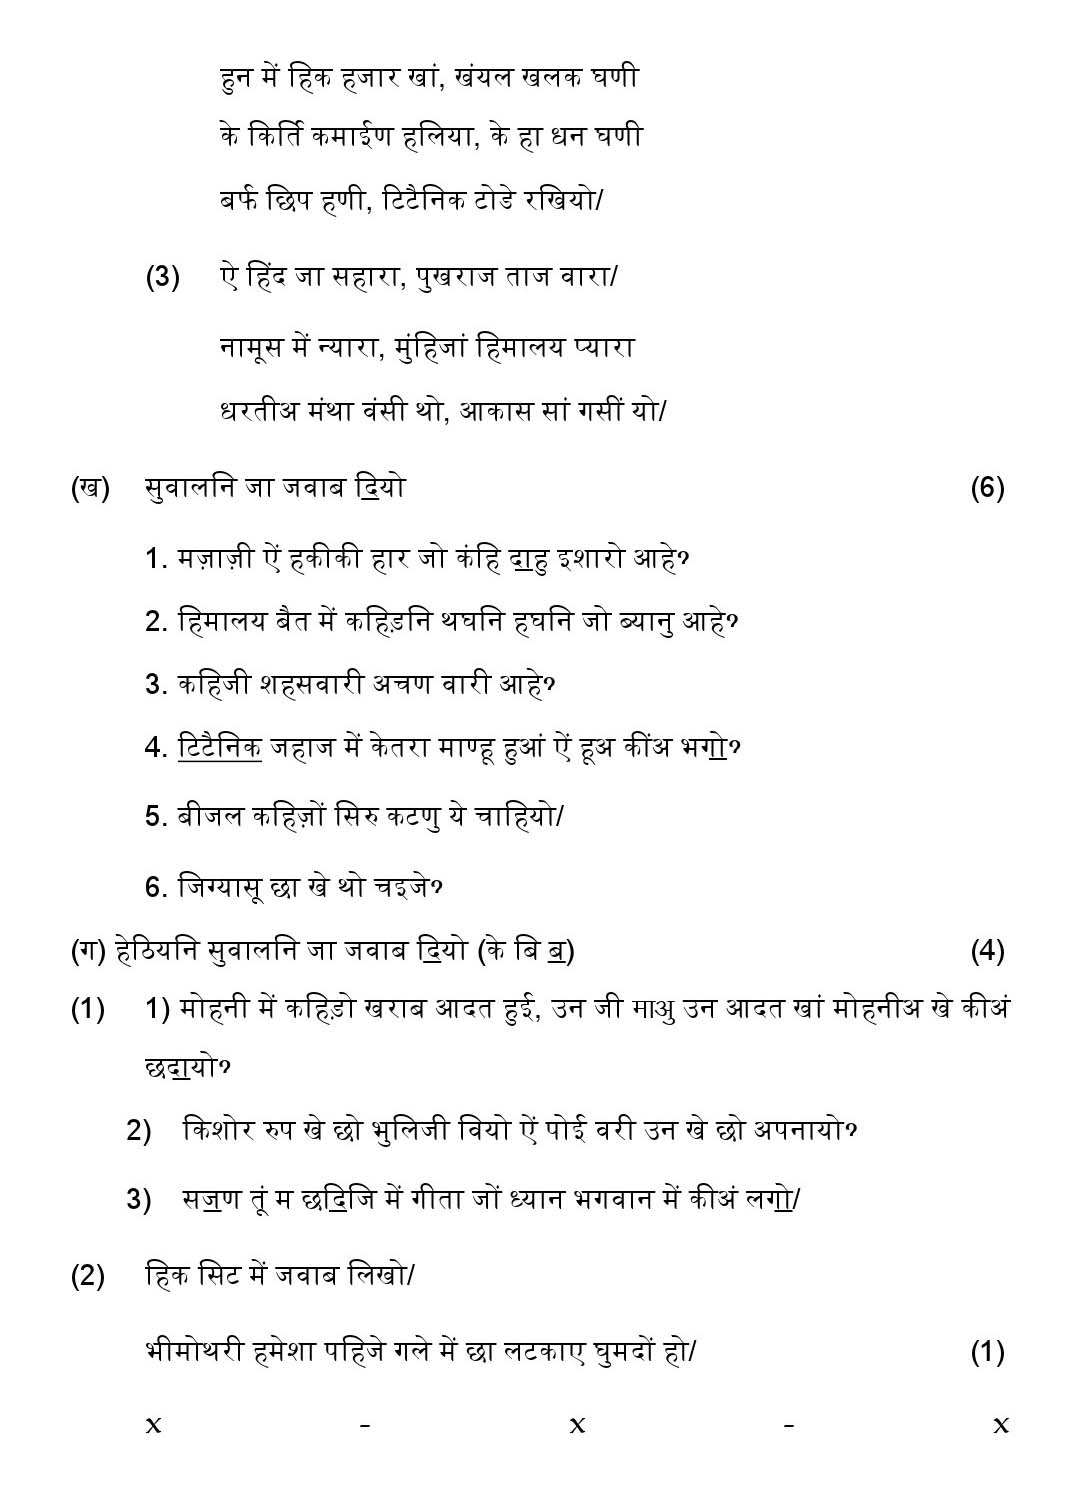 Sindhi CBSE Class X Sample Question Paper 2018-19 - Image 6